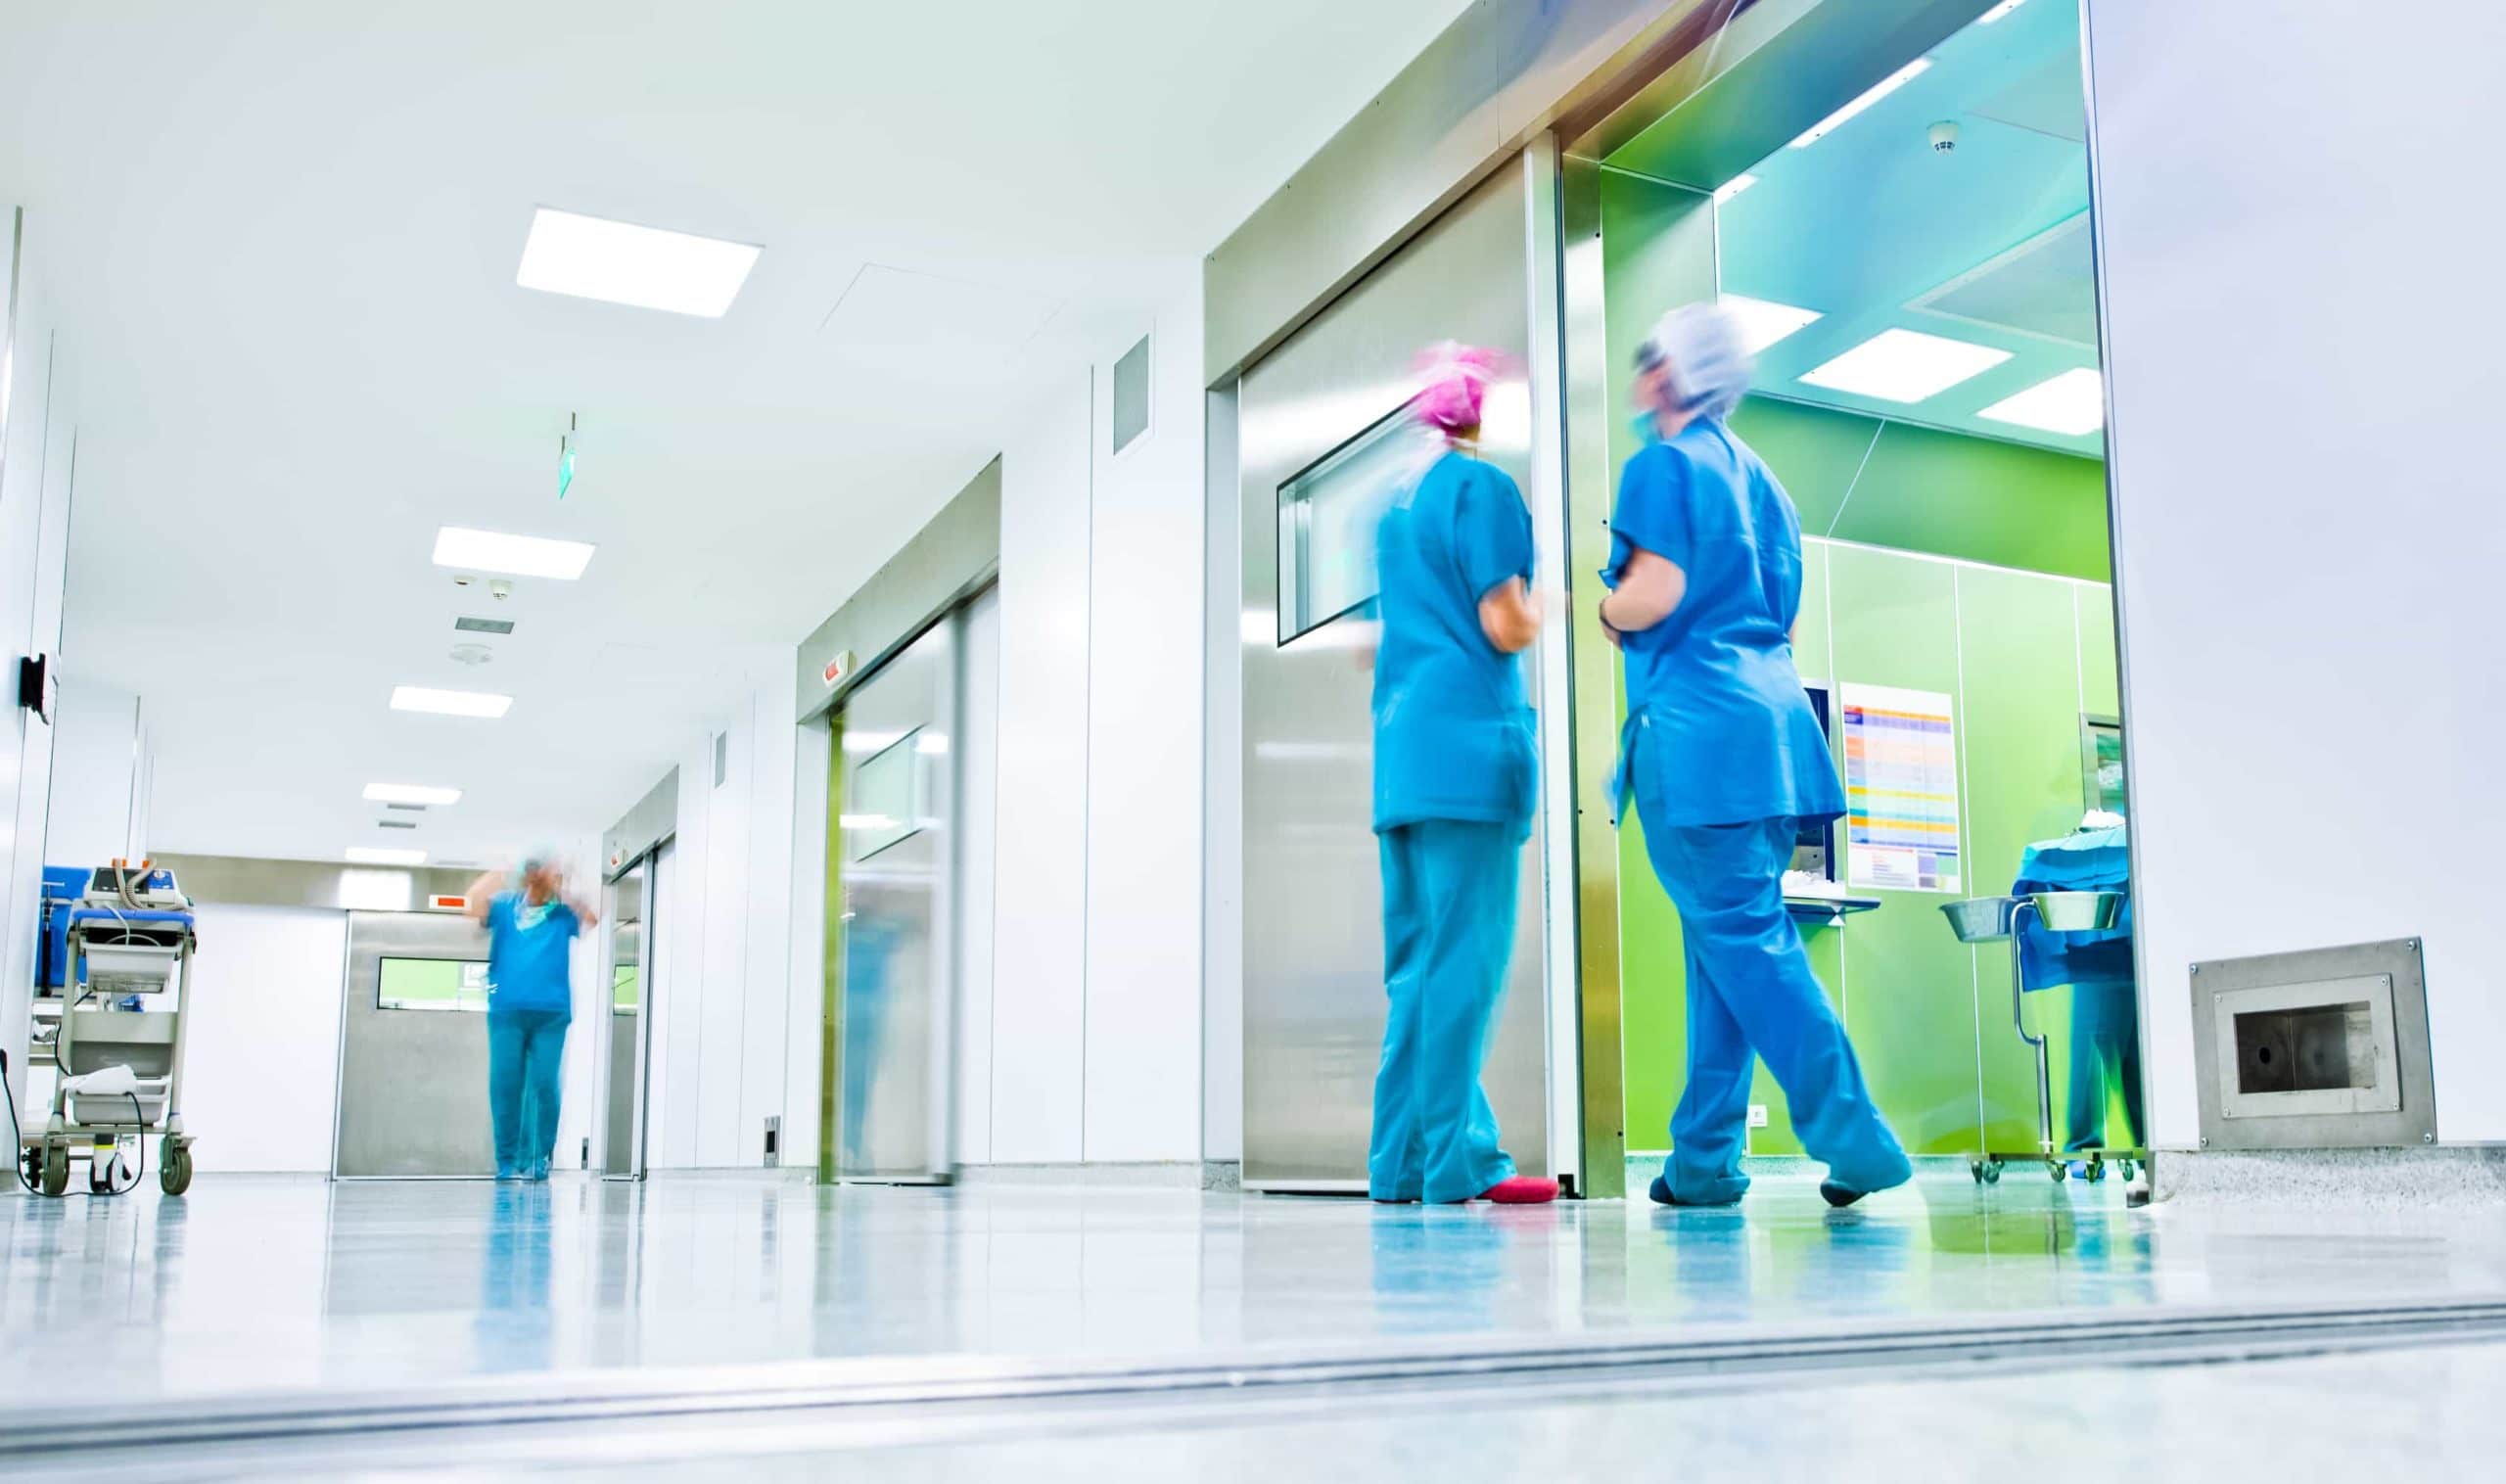 Blurred figures in medical uniforms